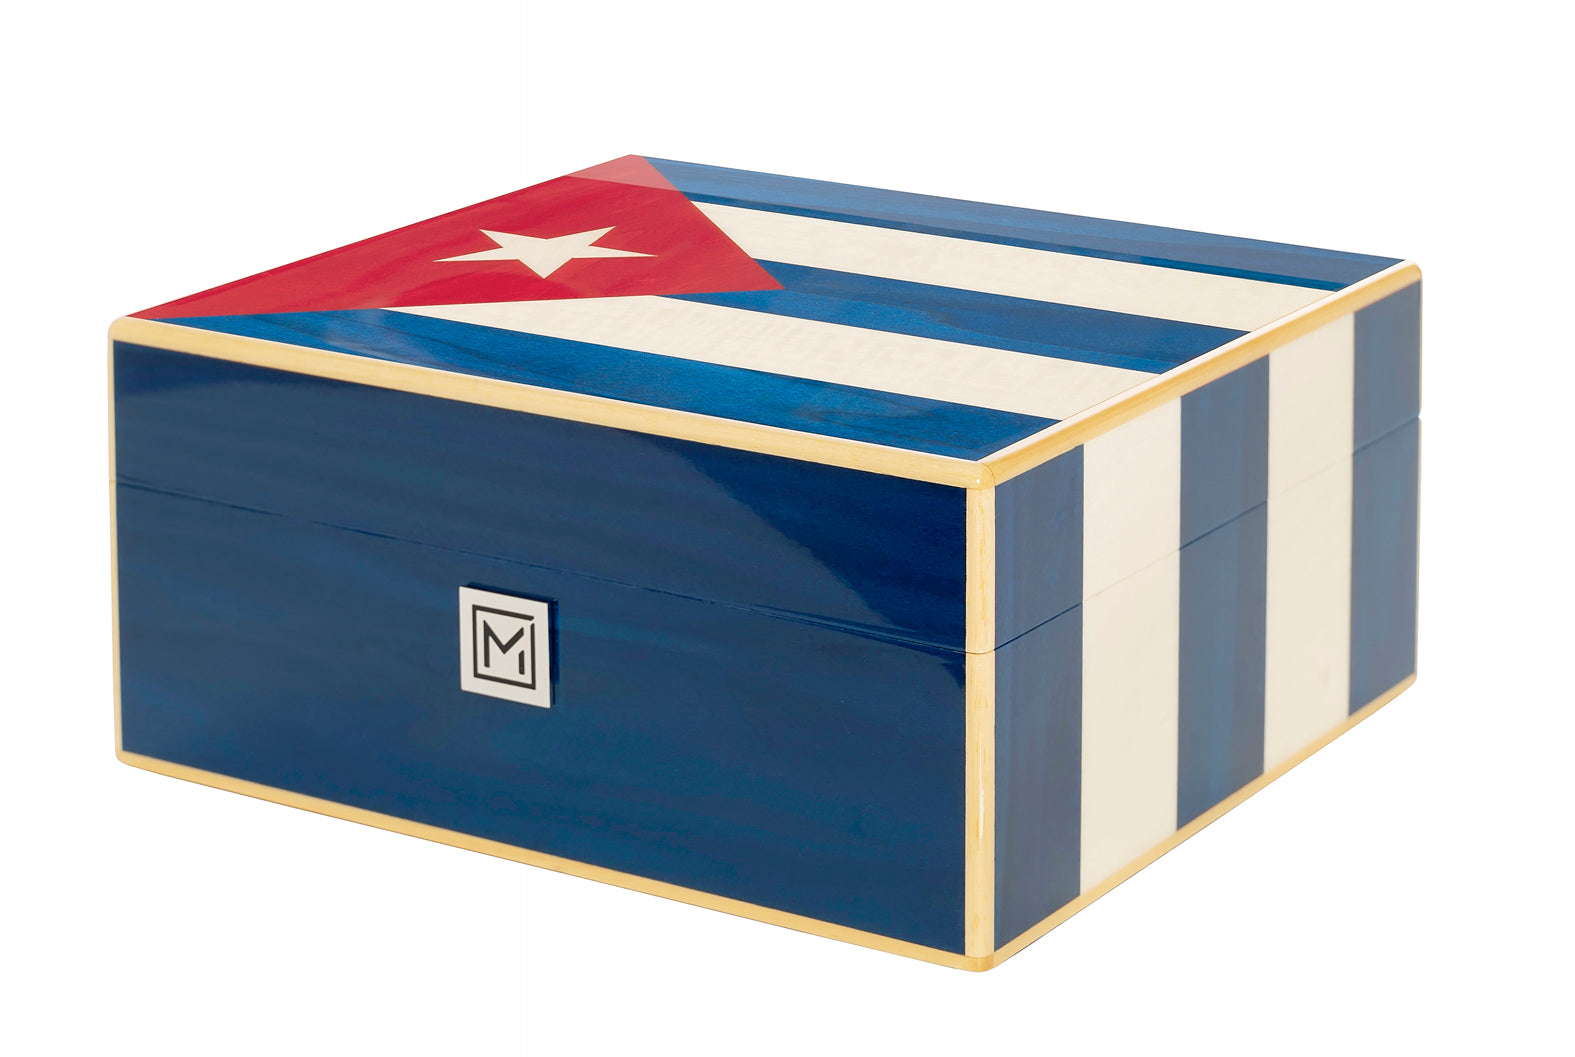 Cuban Flag desktop 40